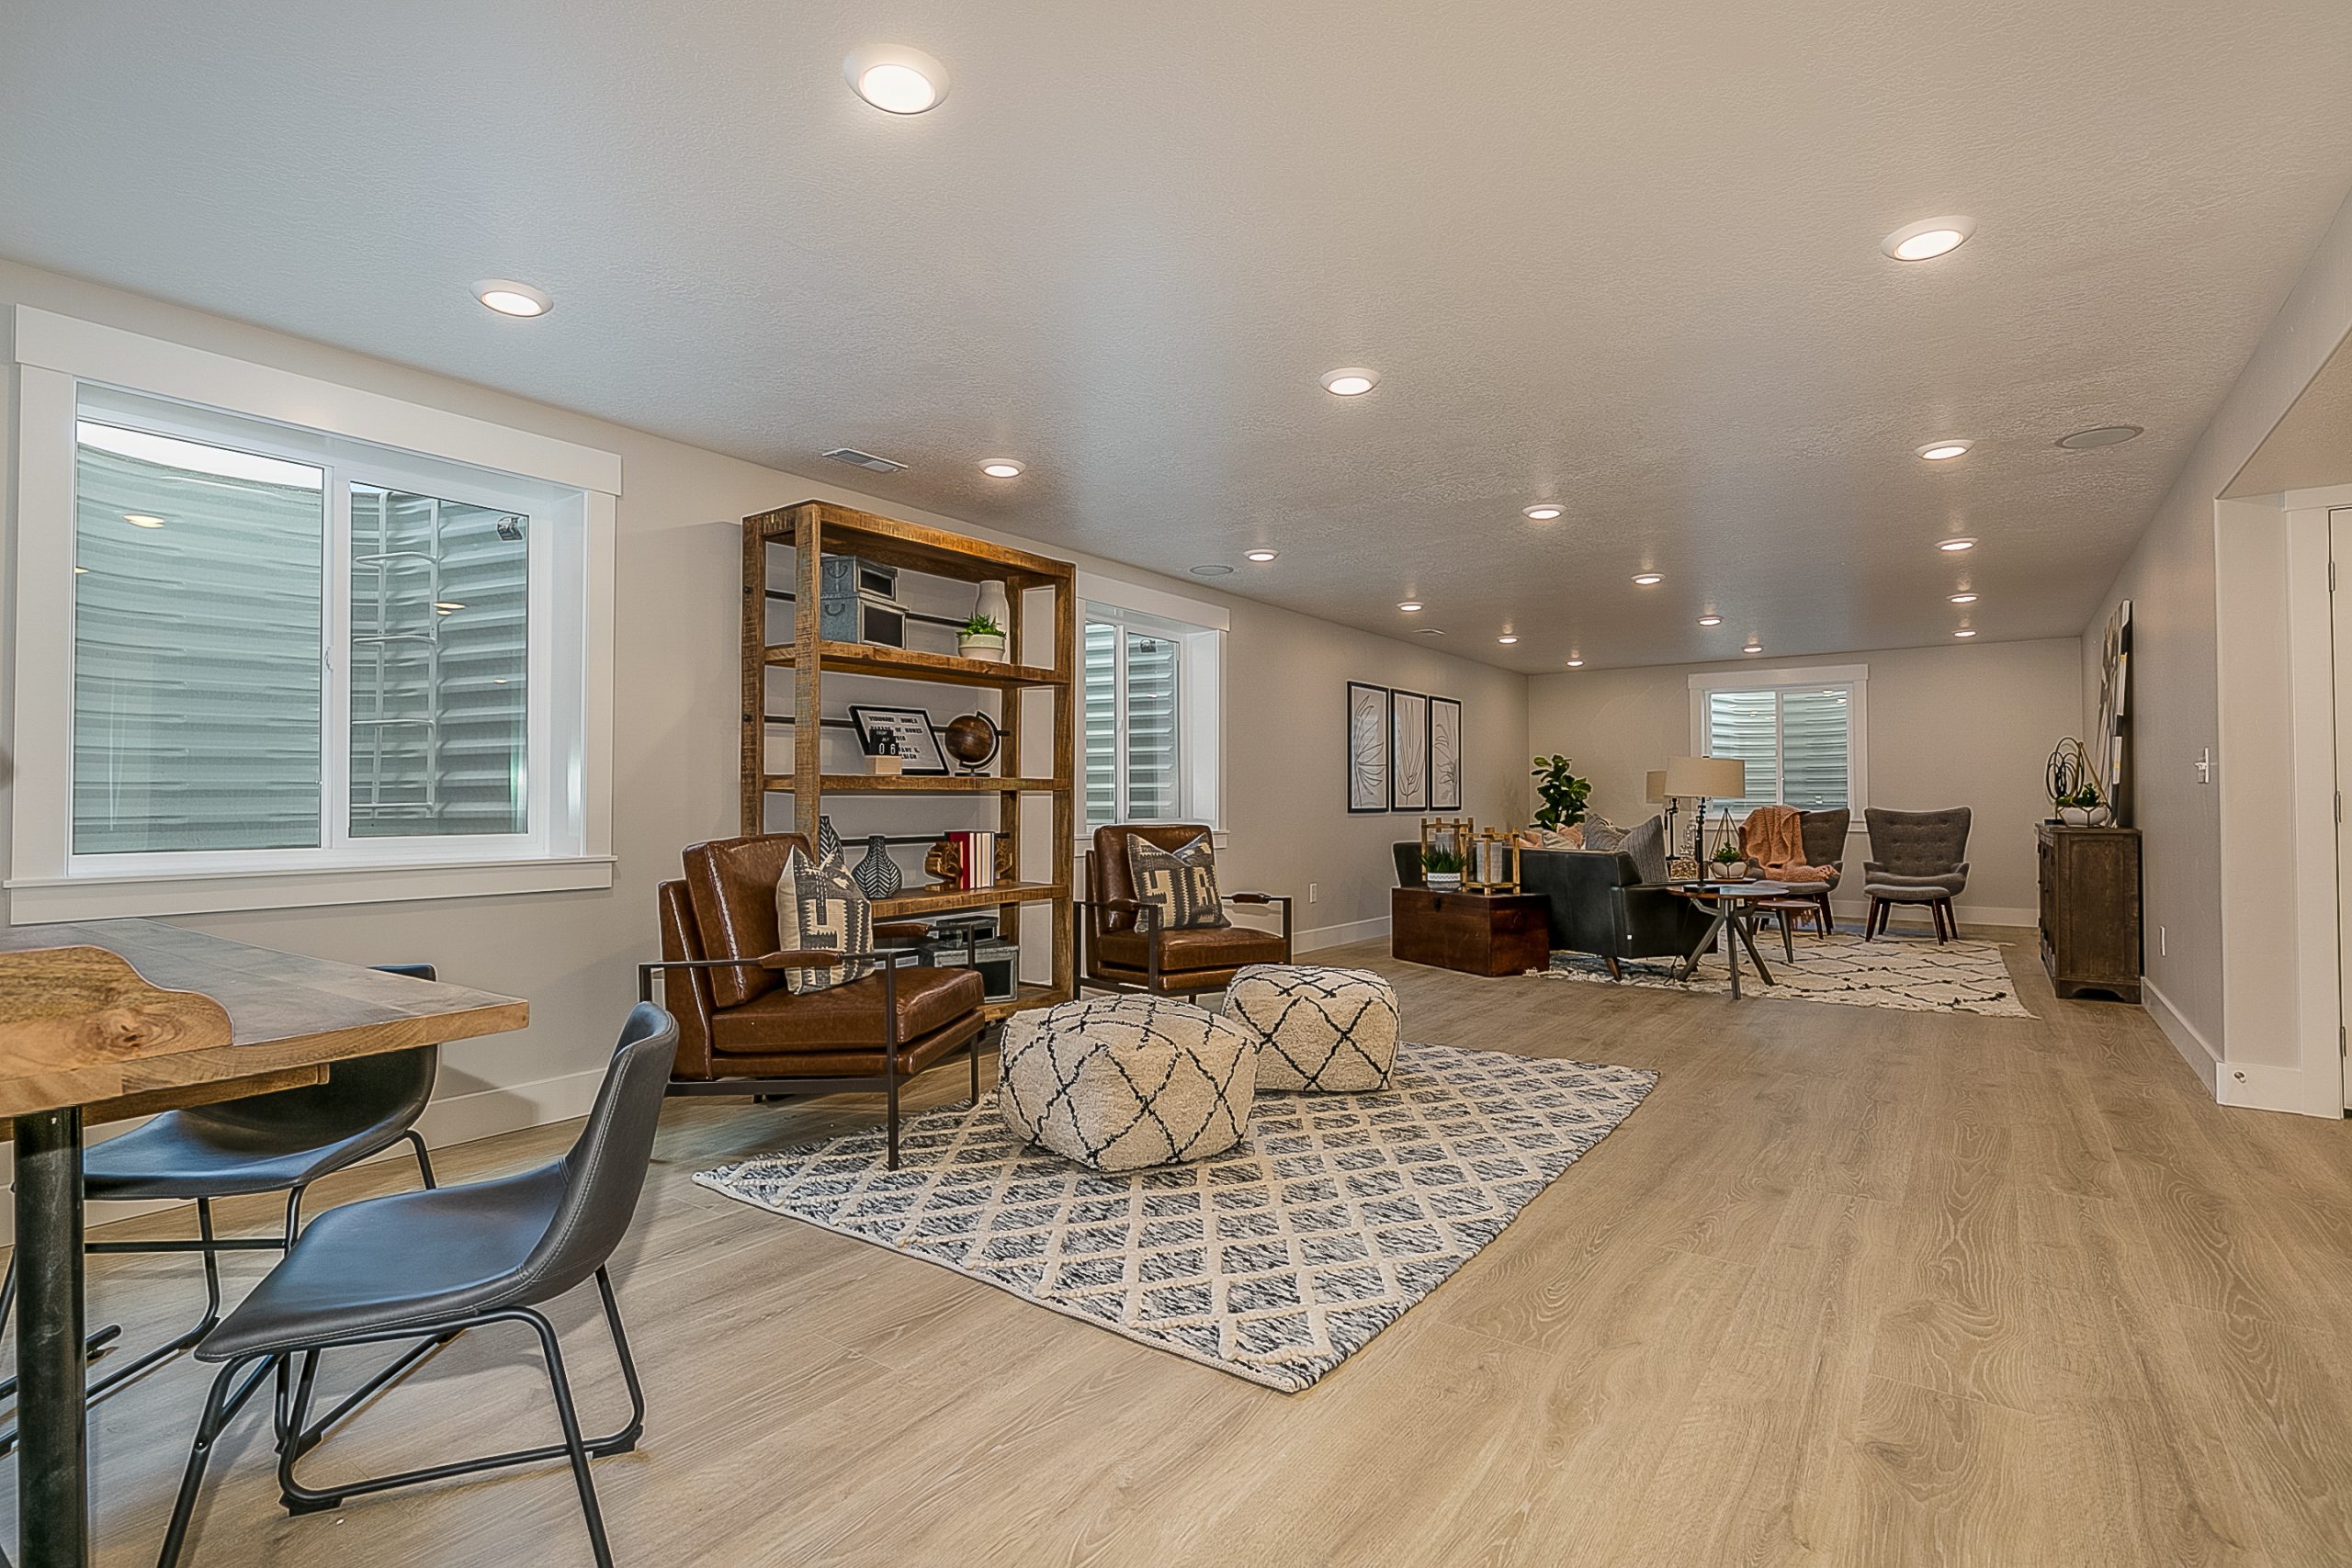 Basement living room with vinyl flooring